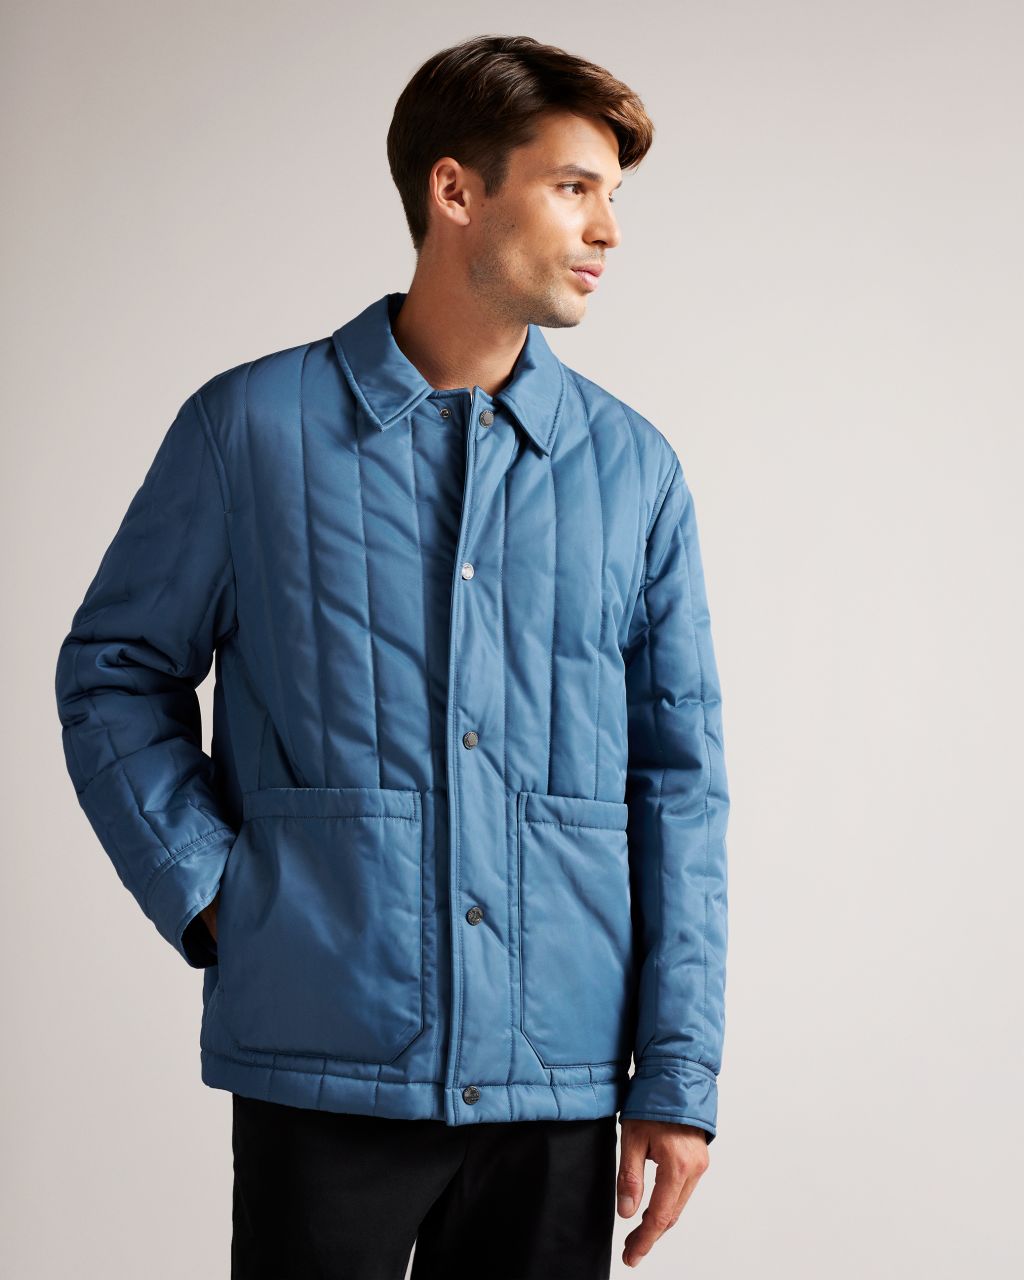 Ted Baker Men's Quilted Workwear Jacket in Medium Blue, Skelton